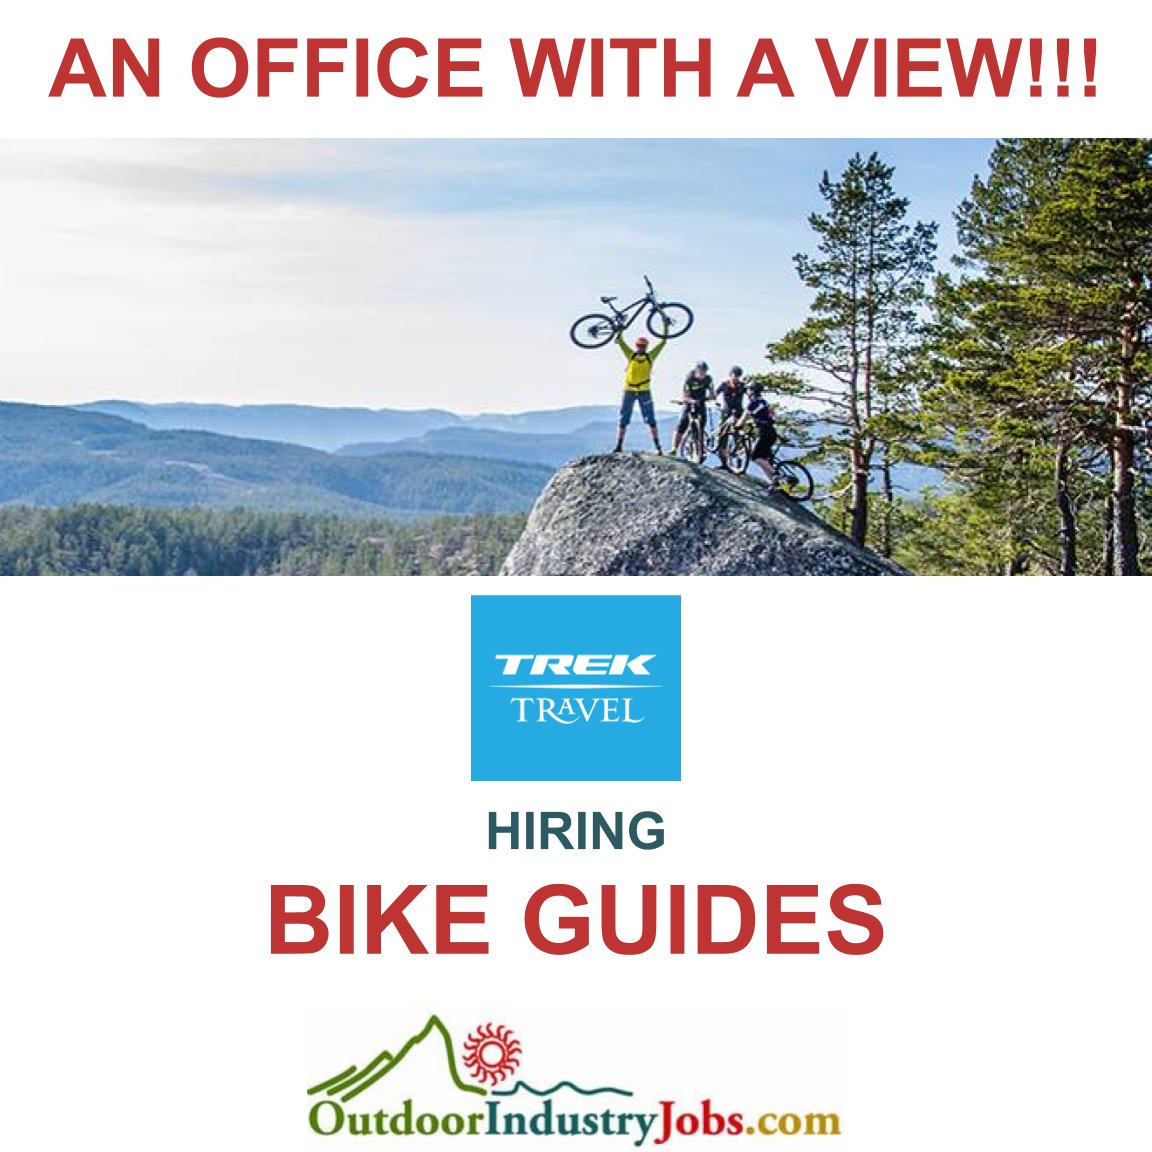 Apply Here: outdoorindustryjobs.com/JobDetail/GetJ…

#outdoorindustryjobs #trektravel #trektraveladventure #bikejobs #bikeguide #bikeguidelife #cyclingjobs #cyclingguide #cyclingtours
@TrekBikes @TrekTravel